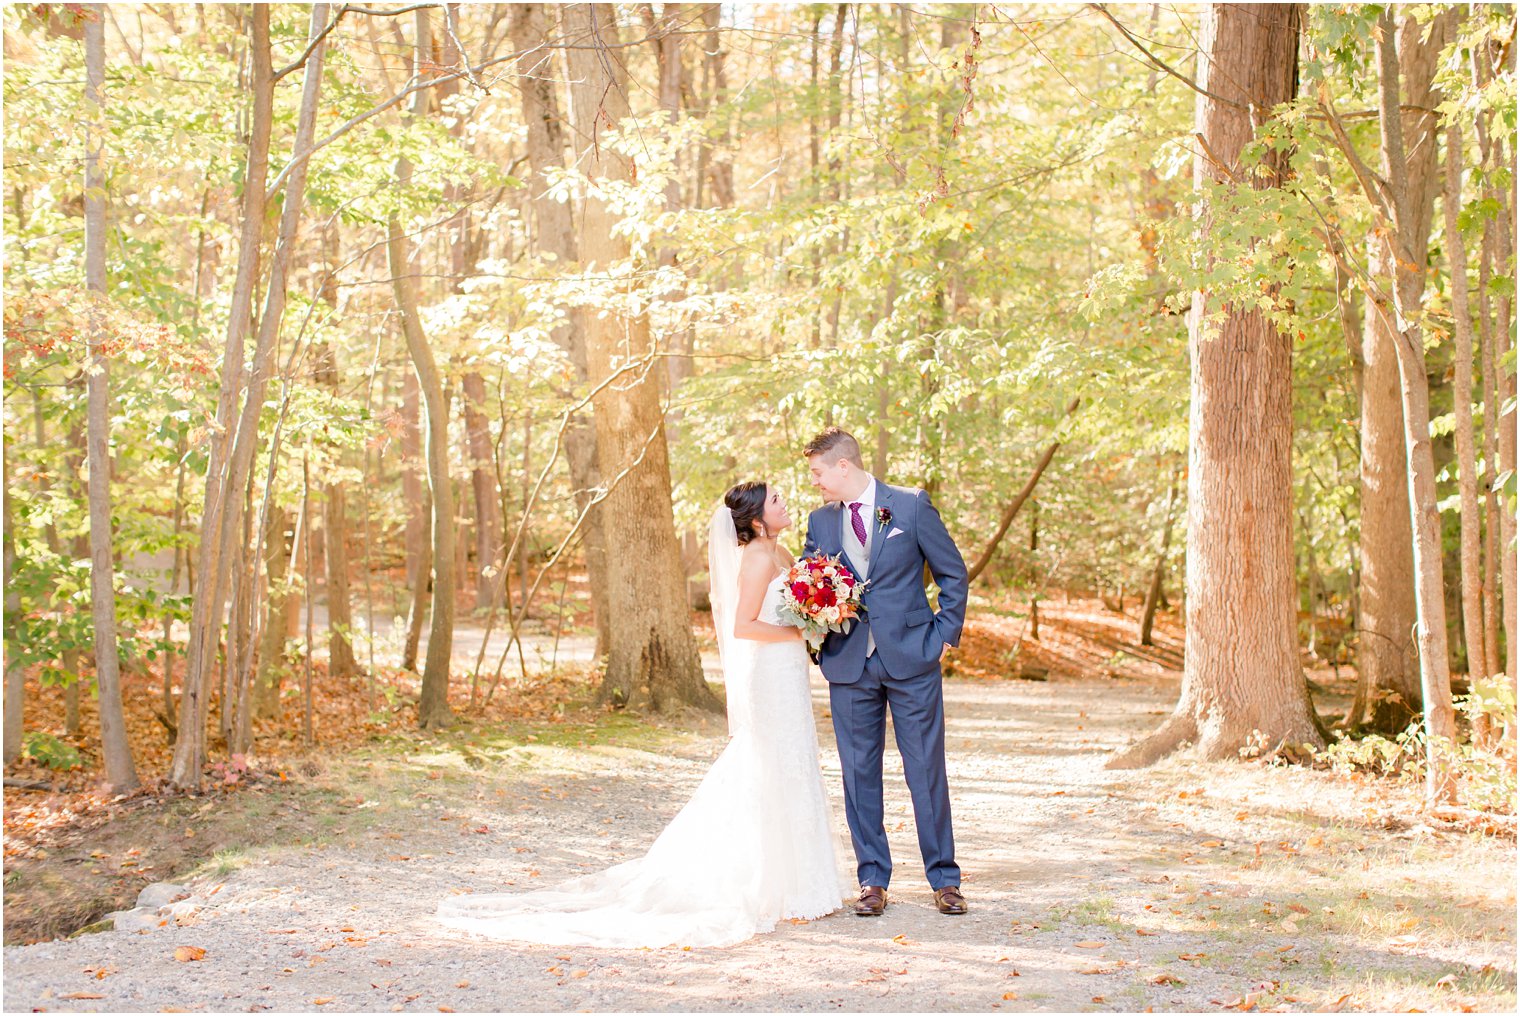 Fall wedding at Meadow Wood Manor in Randolph NJ | Photos by NJ Wedding Photographers Idalia Photography